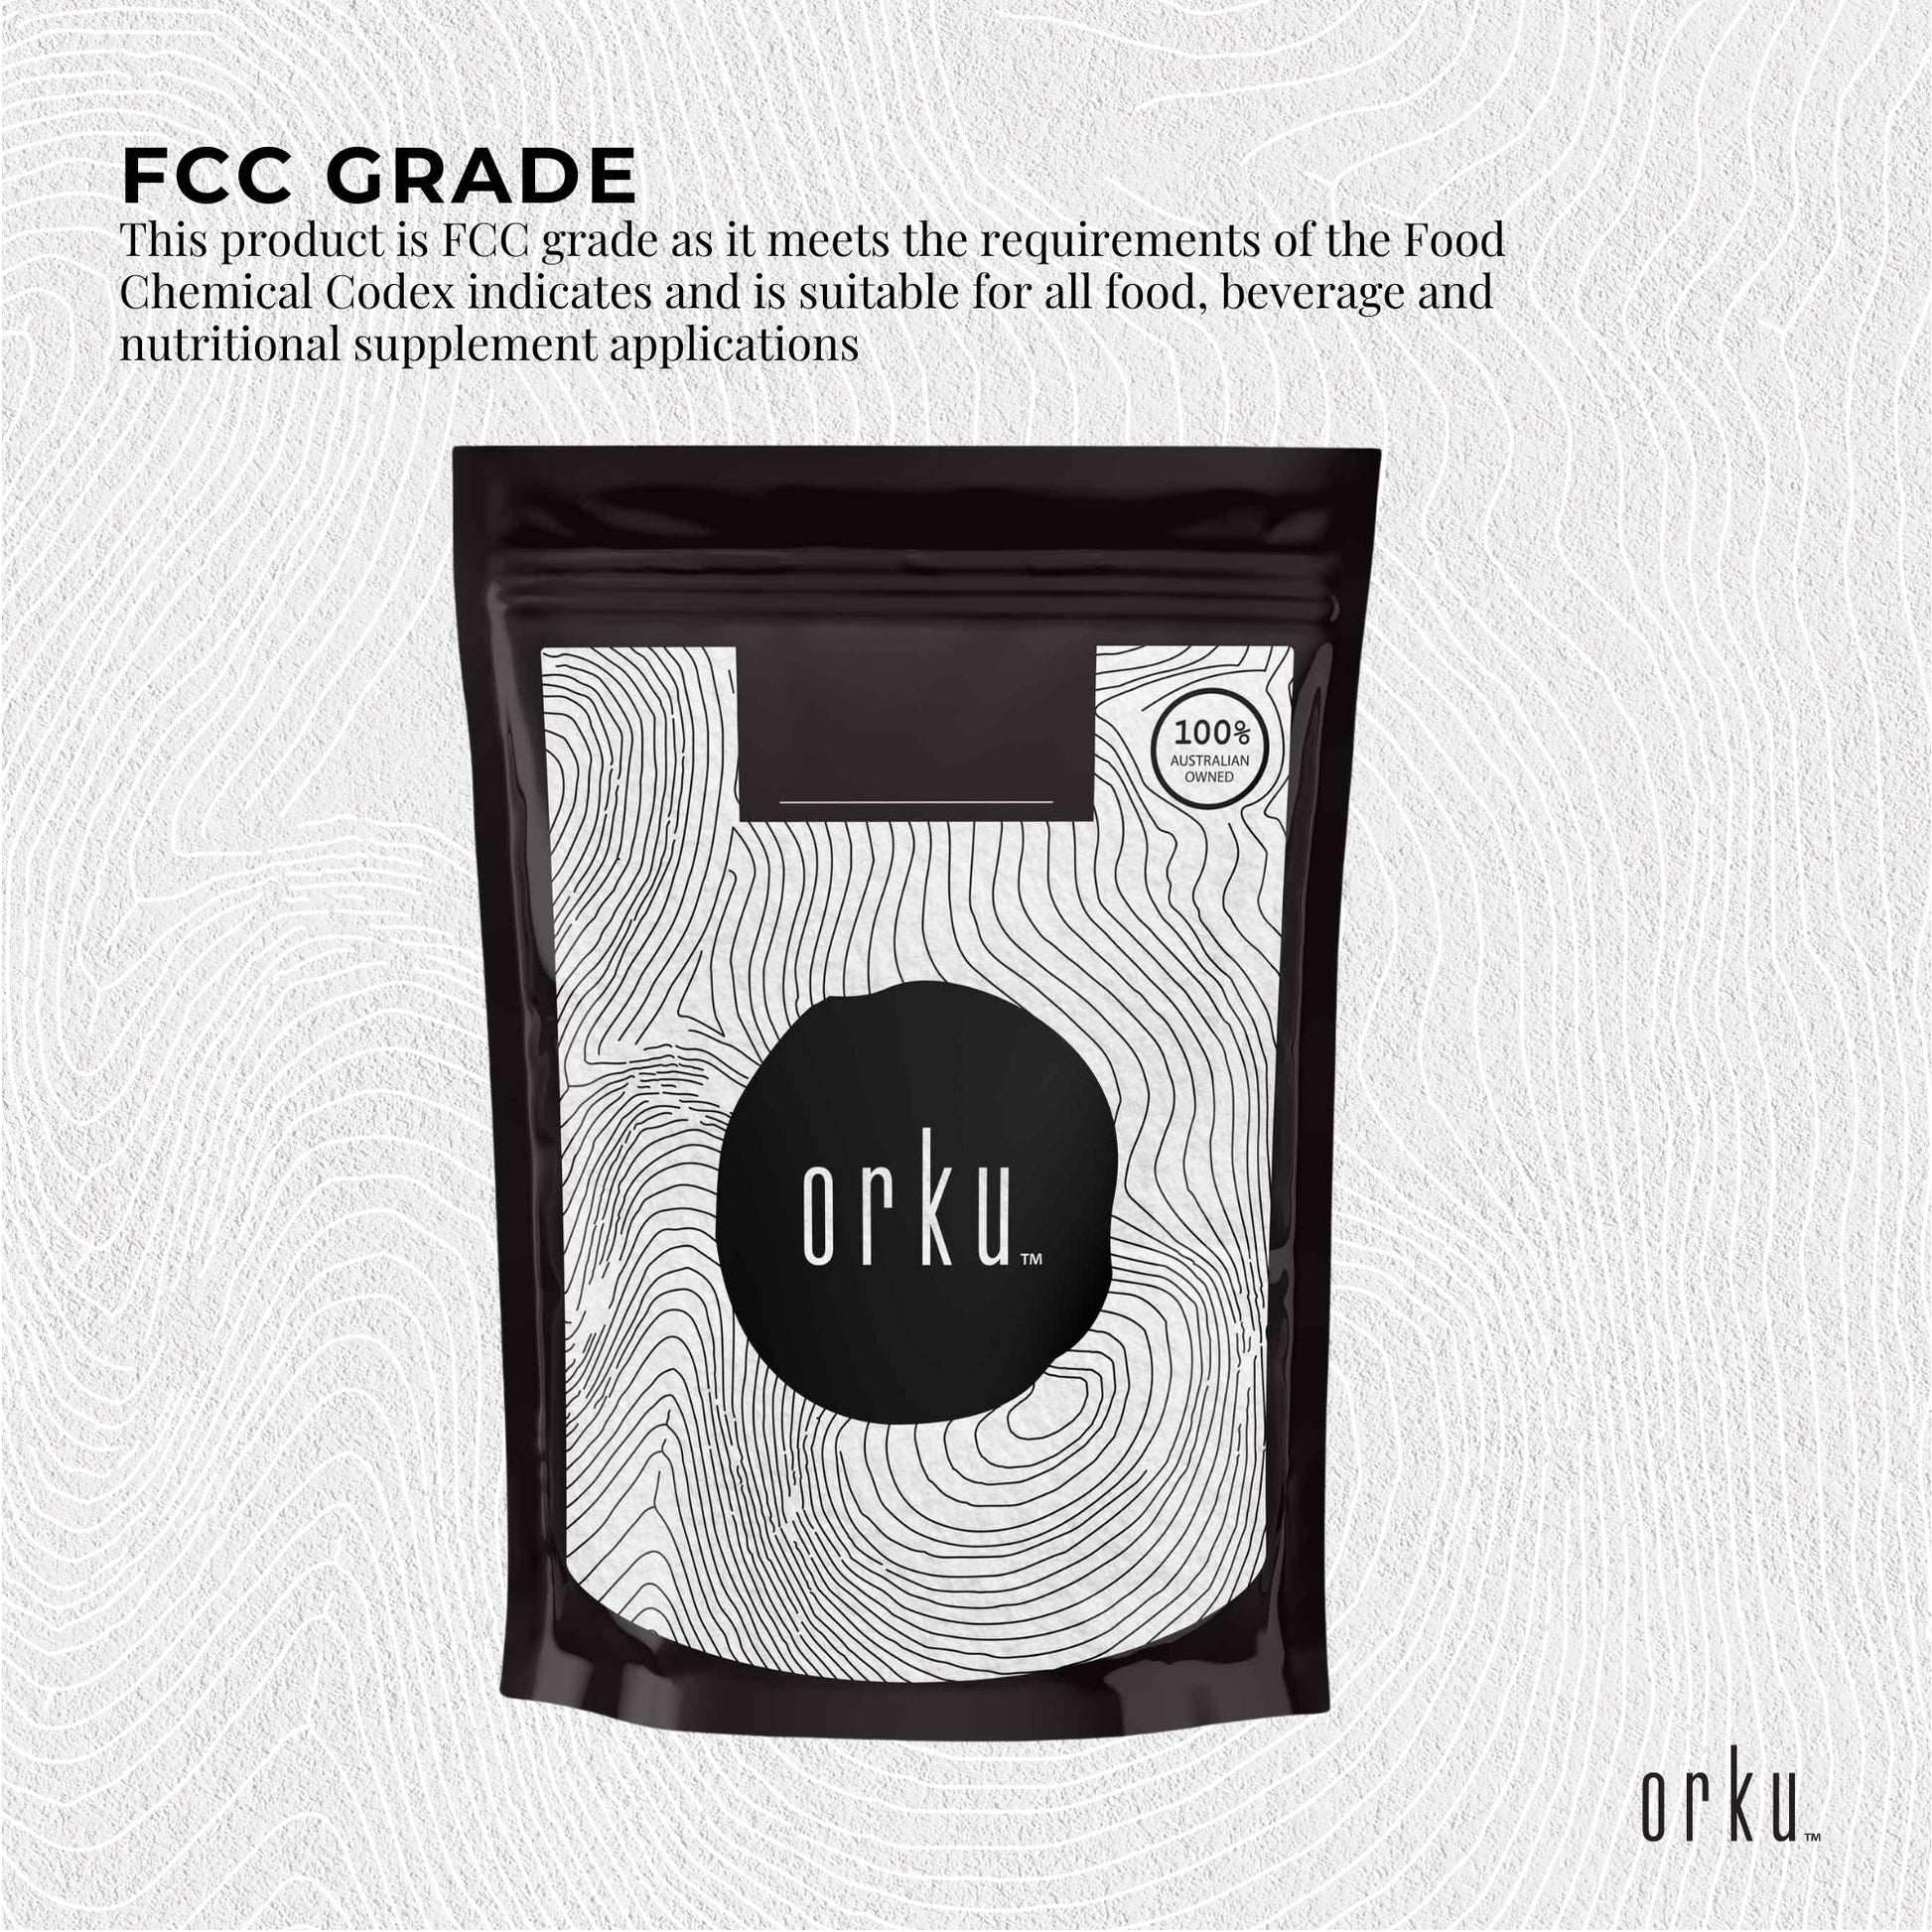 2Kg Organic Potassium Bicarbonate Powder - Food Grade Pure FCC Brewing Baking